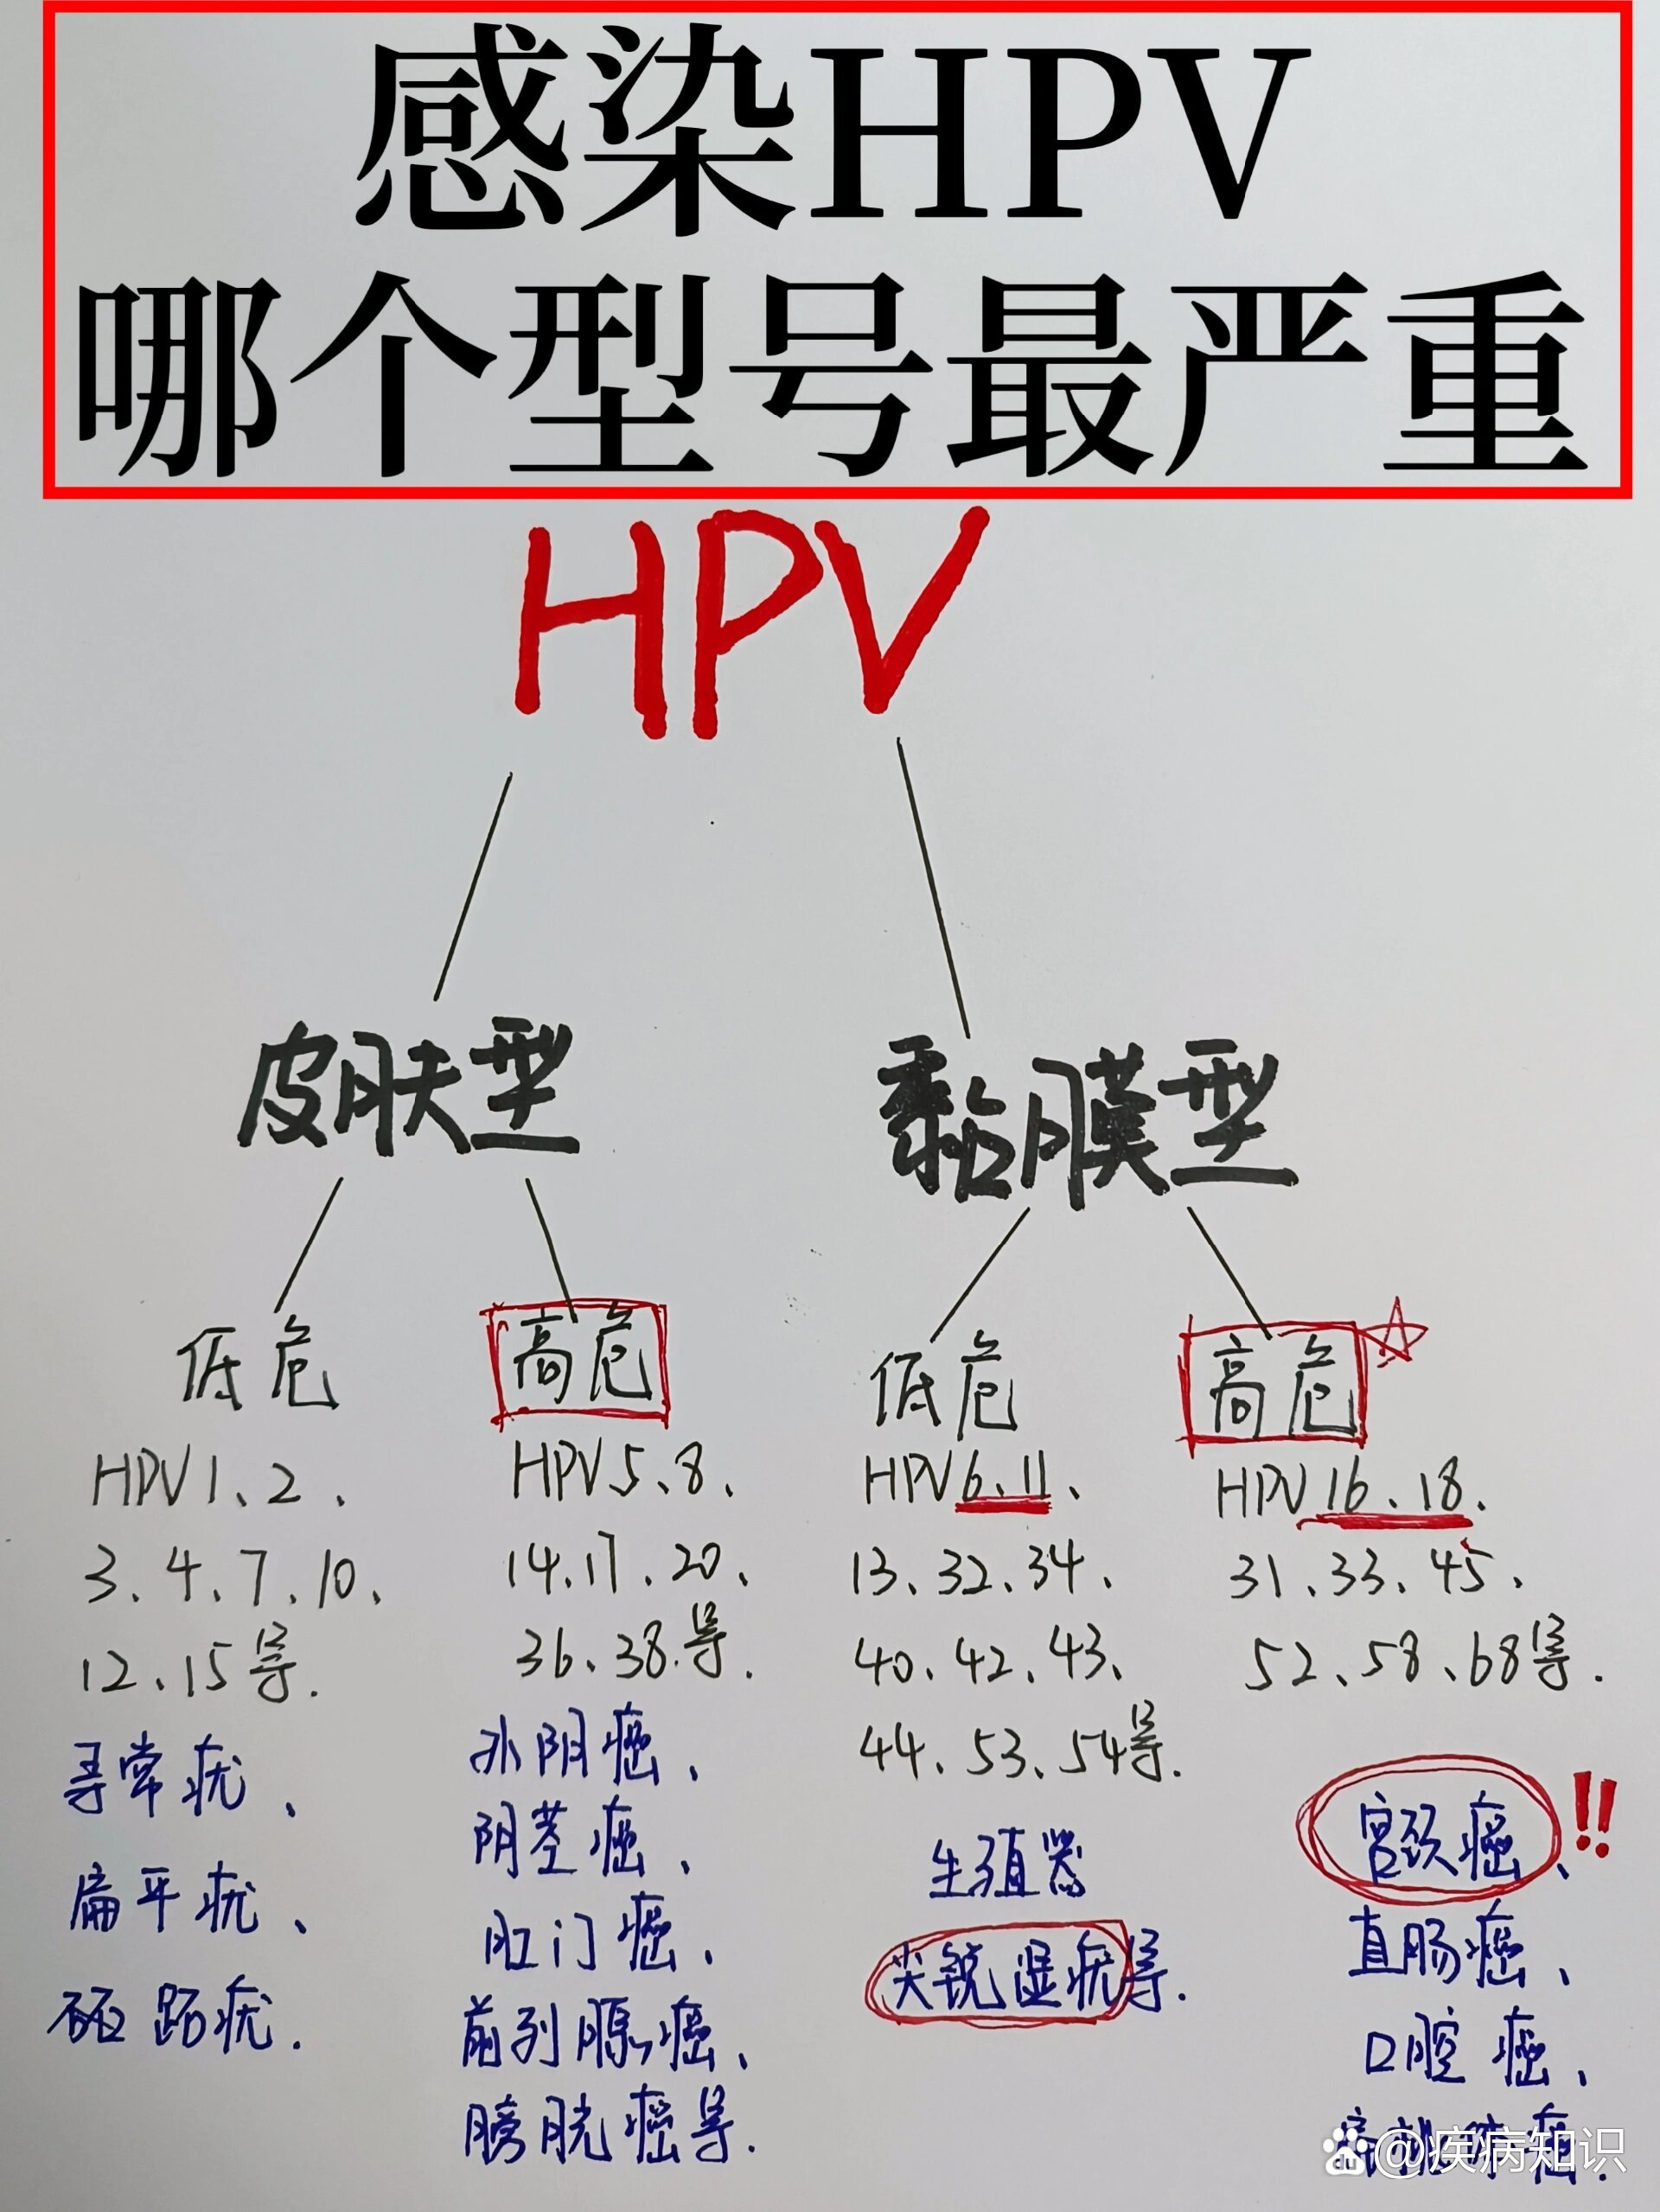 hpv感染,哪个型号最严重?